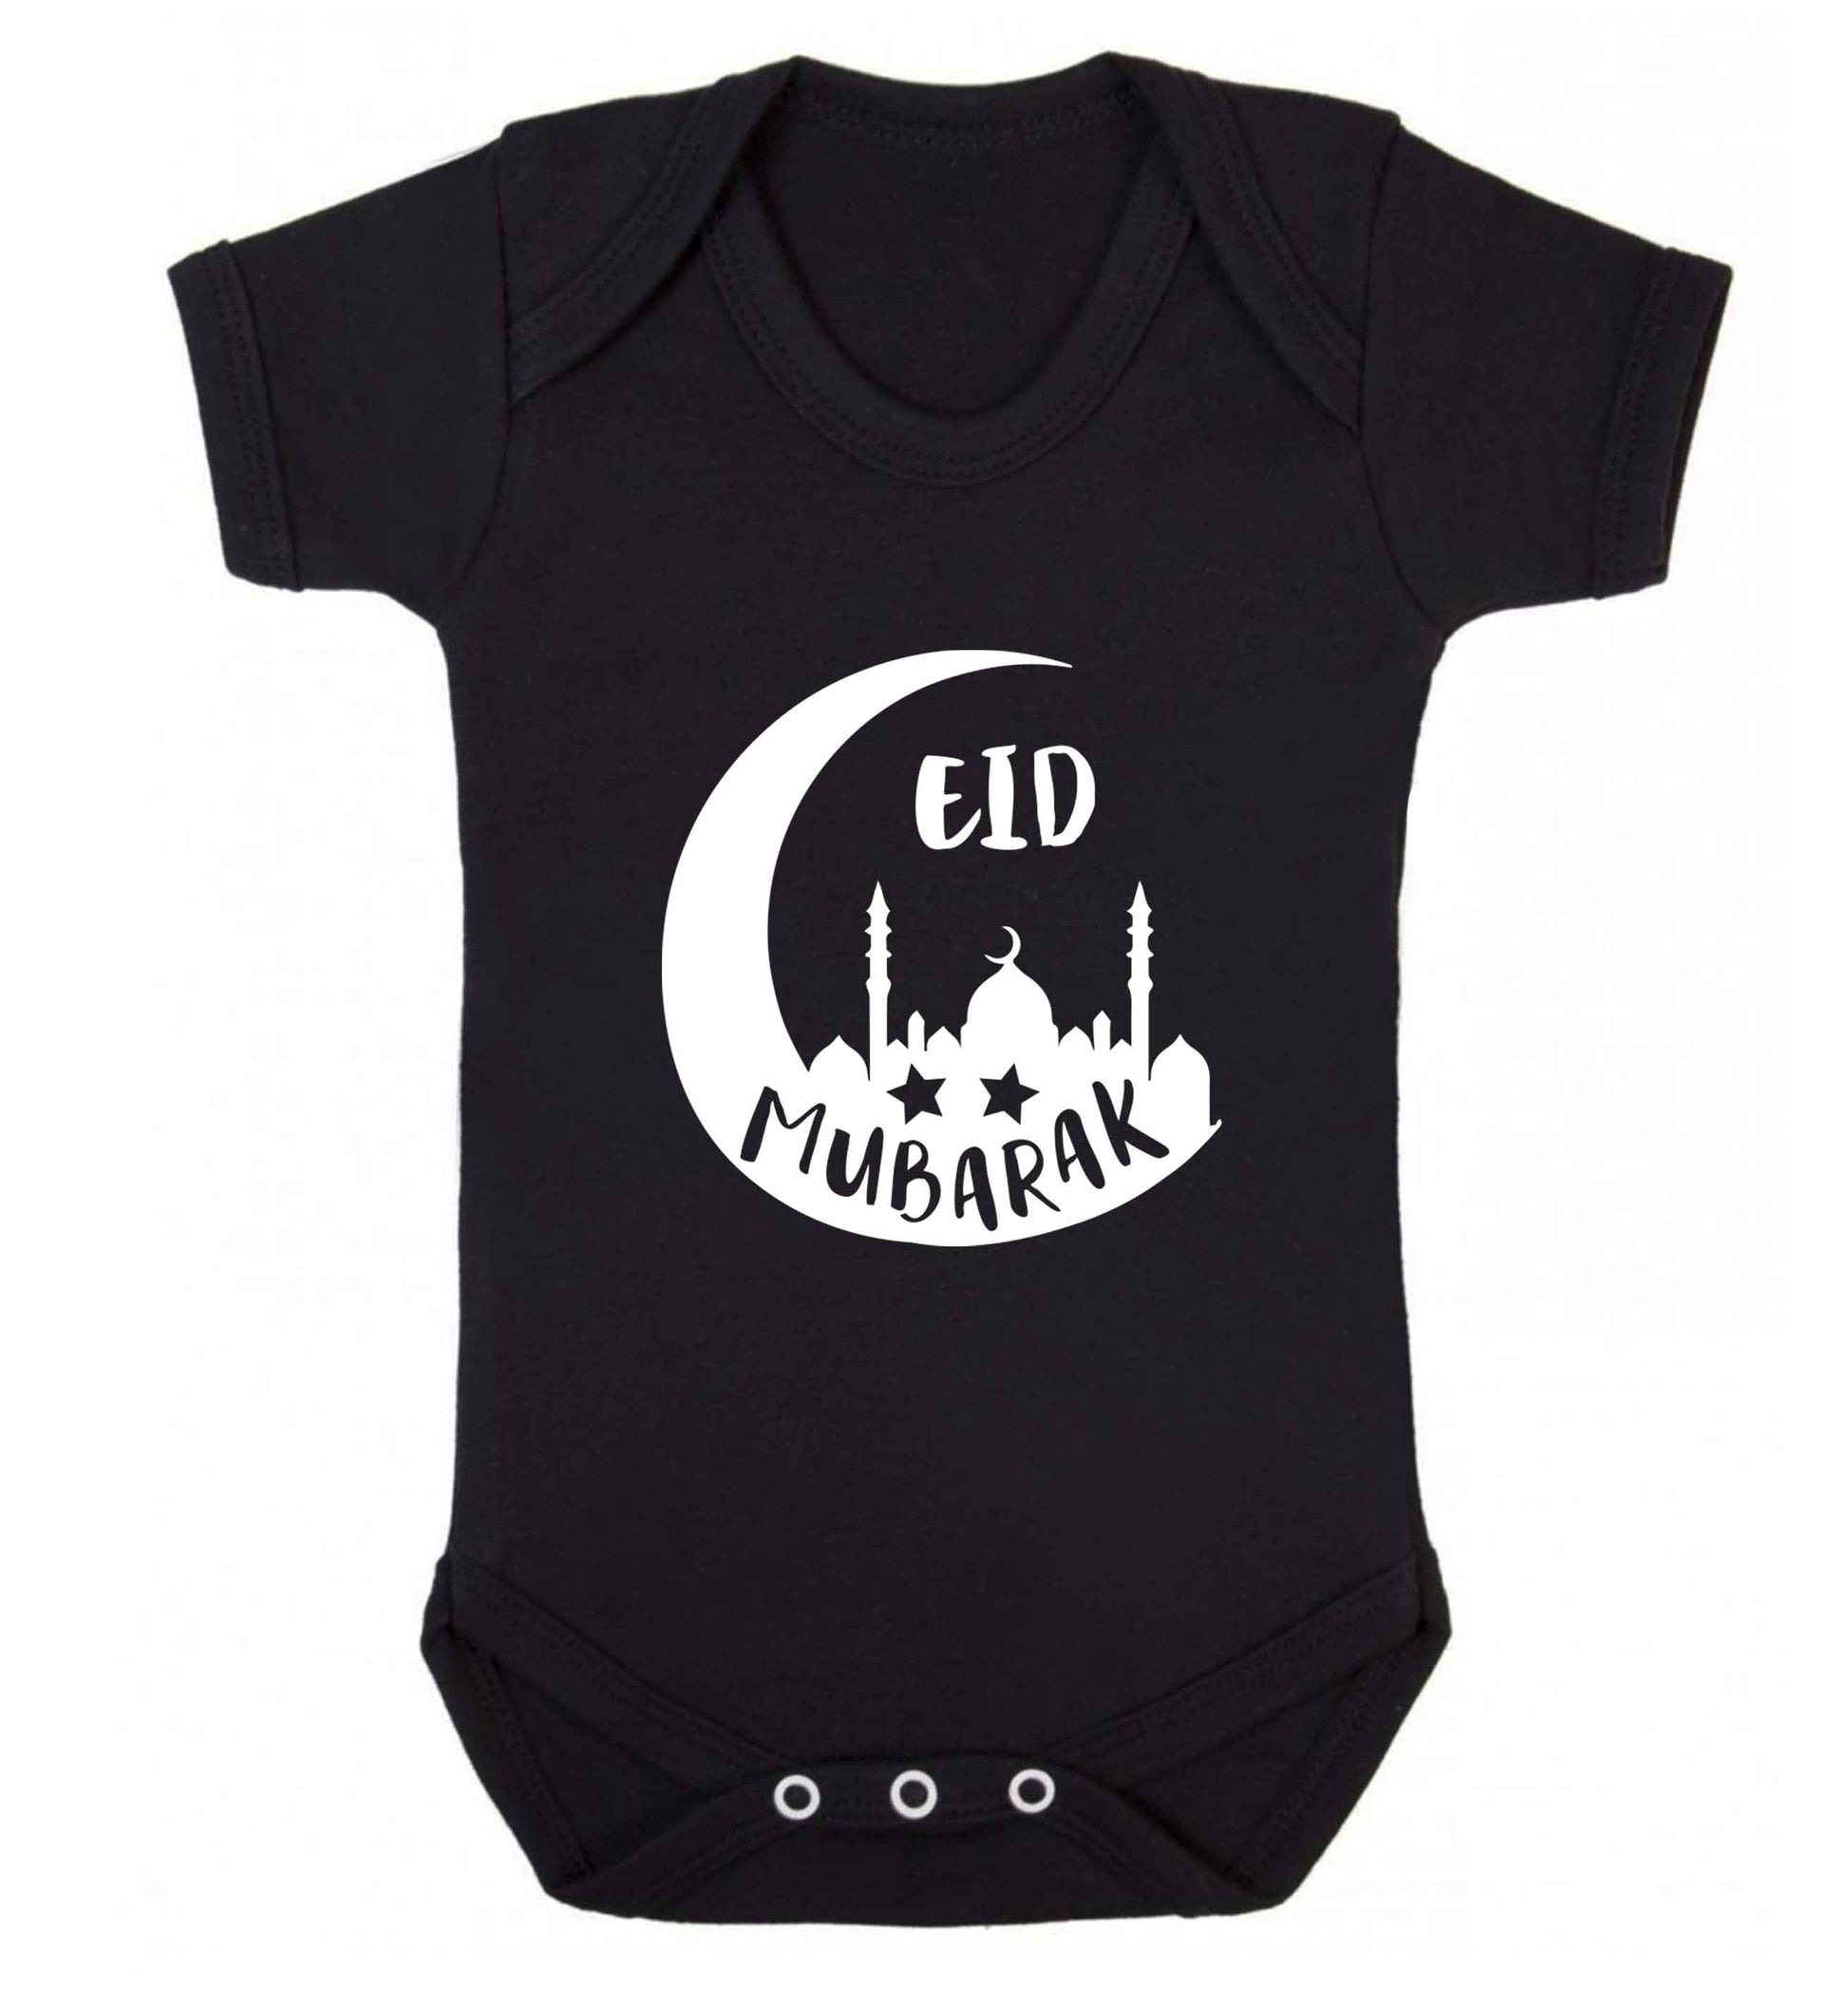 Eid mubarak baby vest black 18-24 months